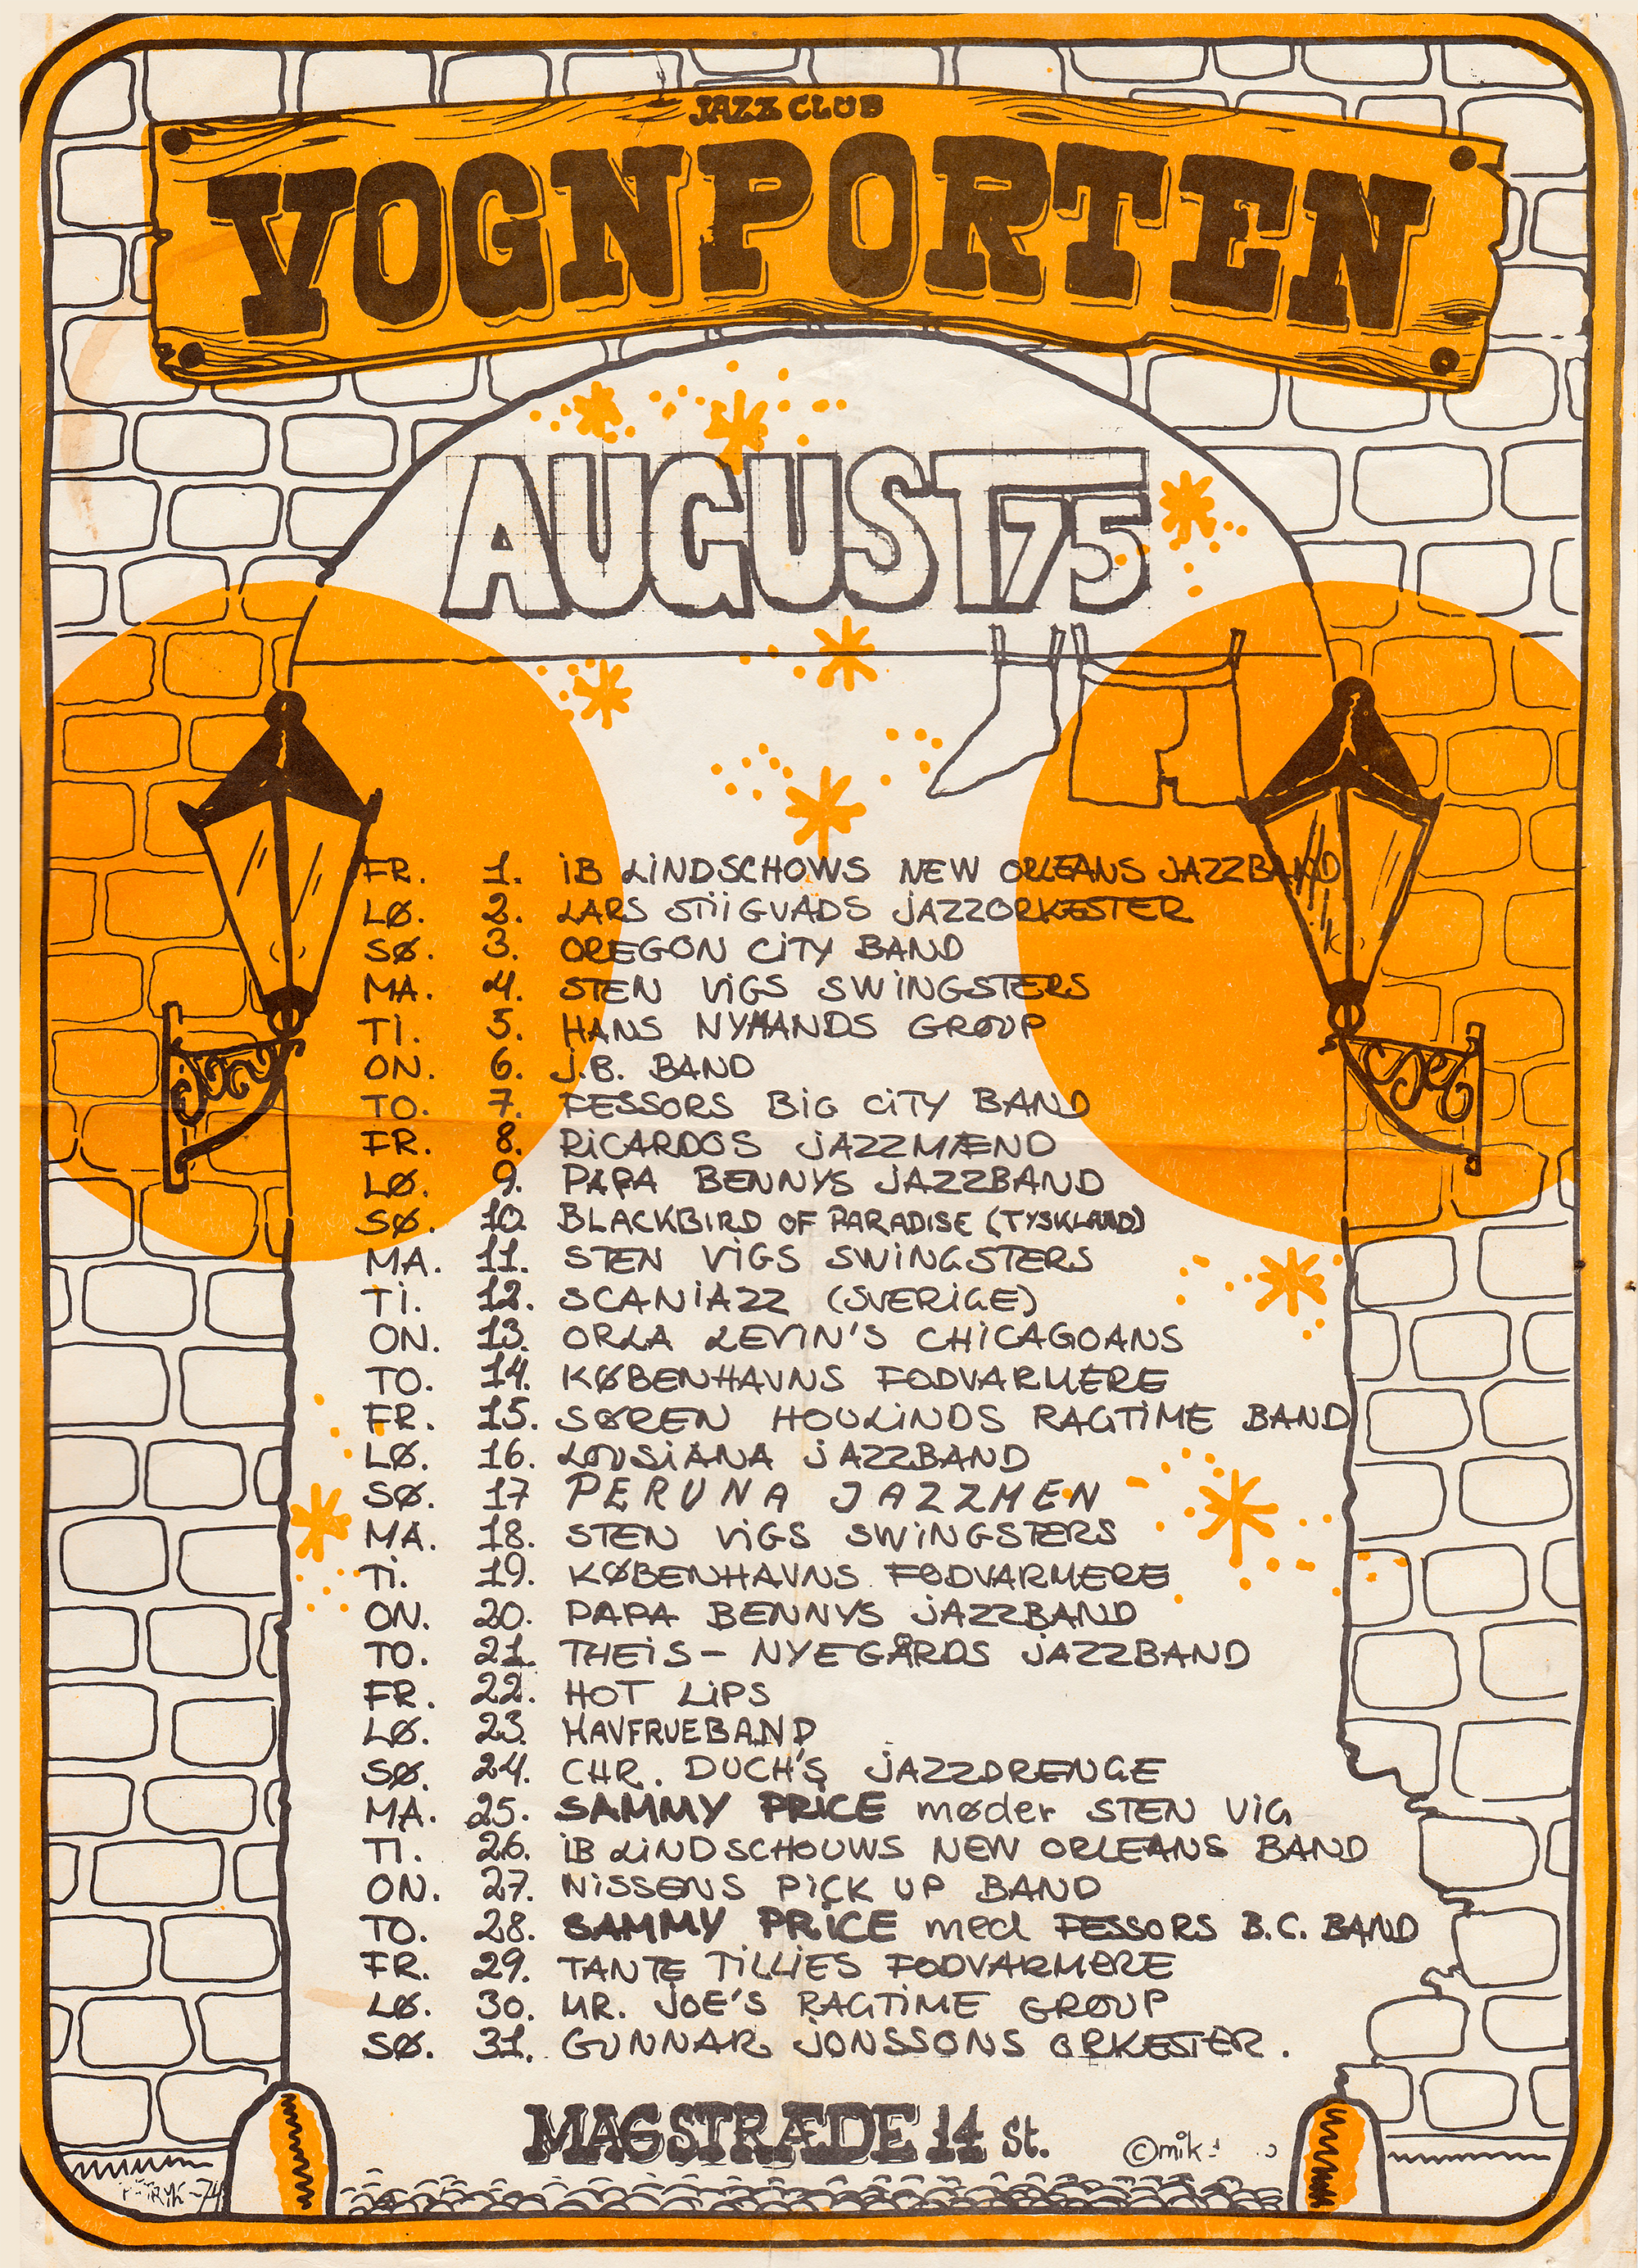 Scaniazz 1975. The August program for Vognporten, Copenhagen